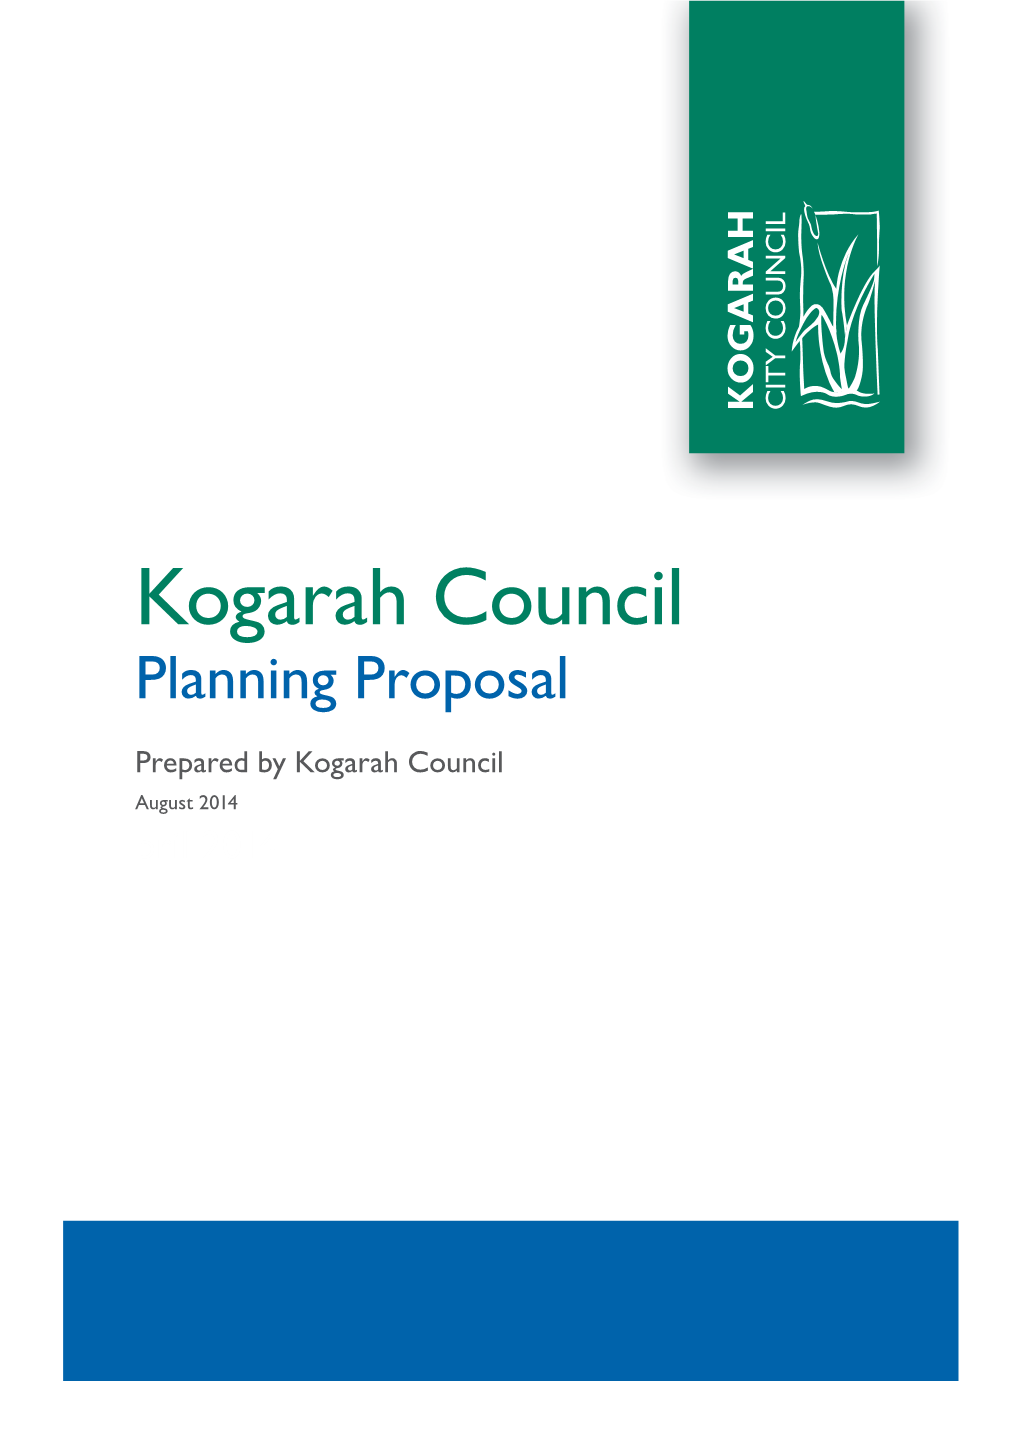 Kogarah Council Planning Proposal